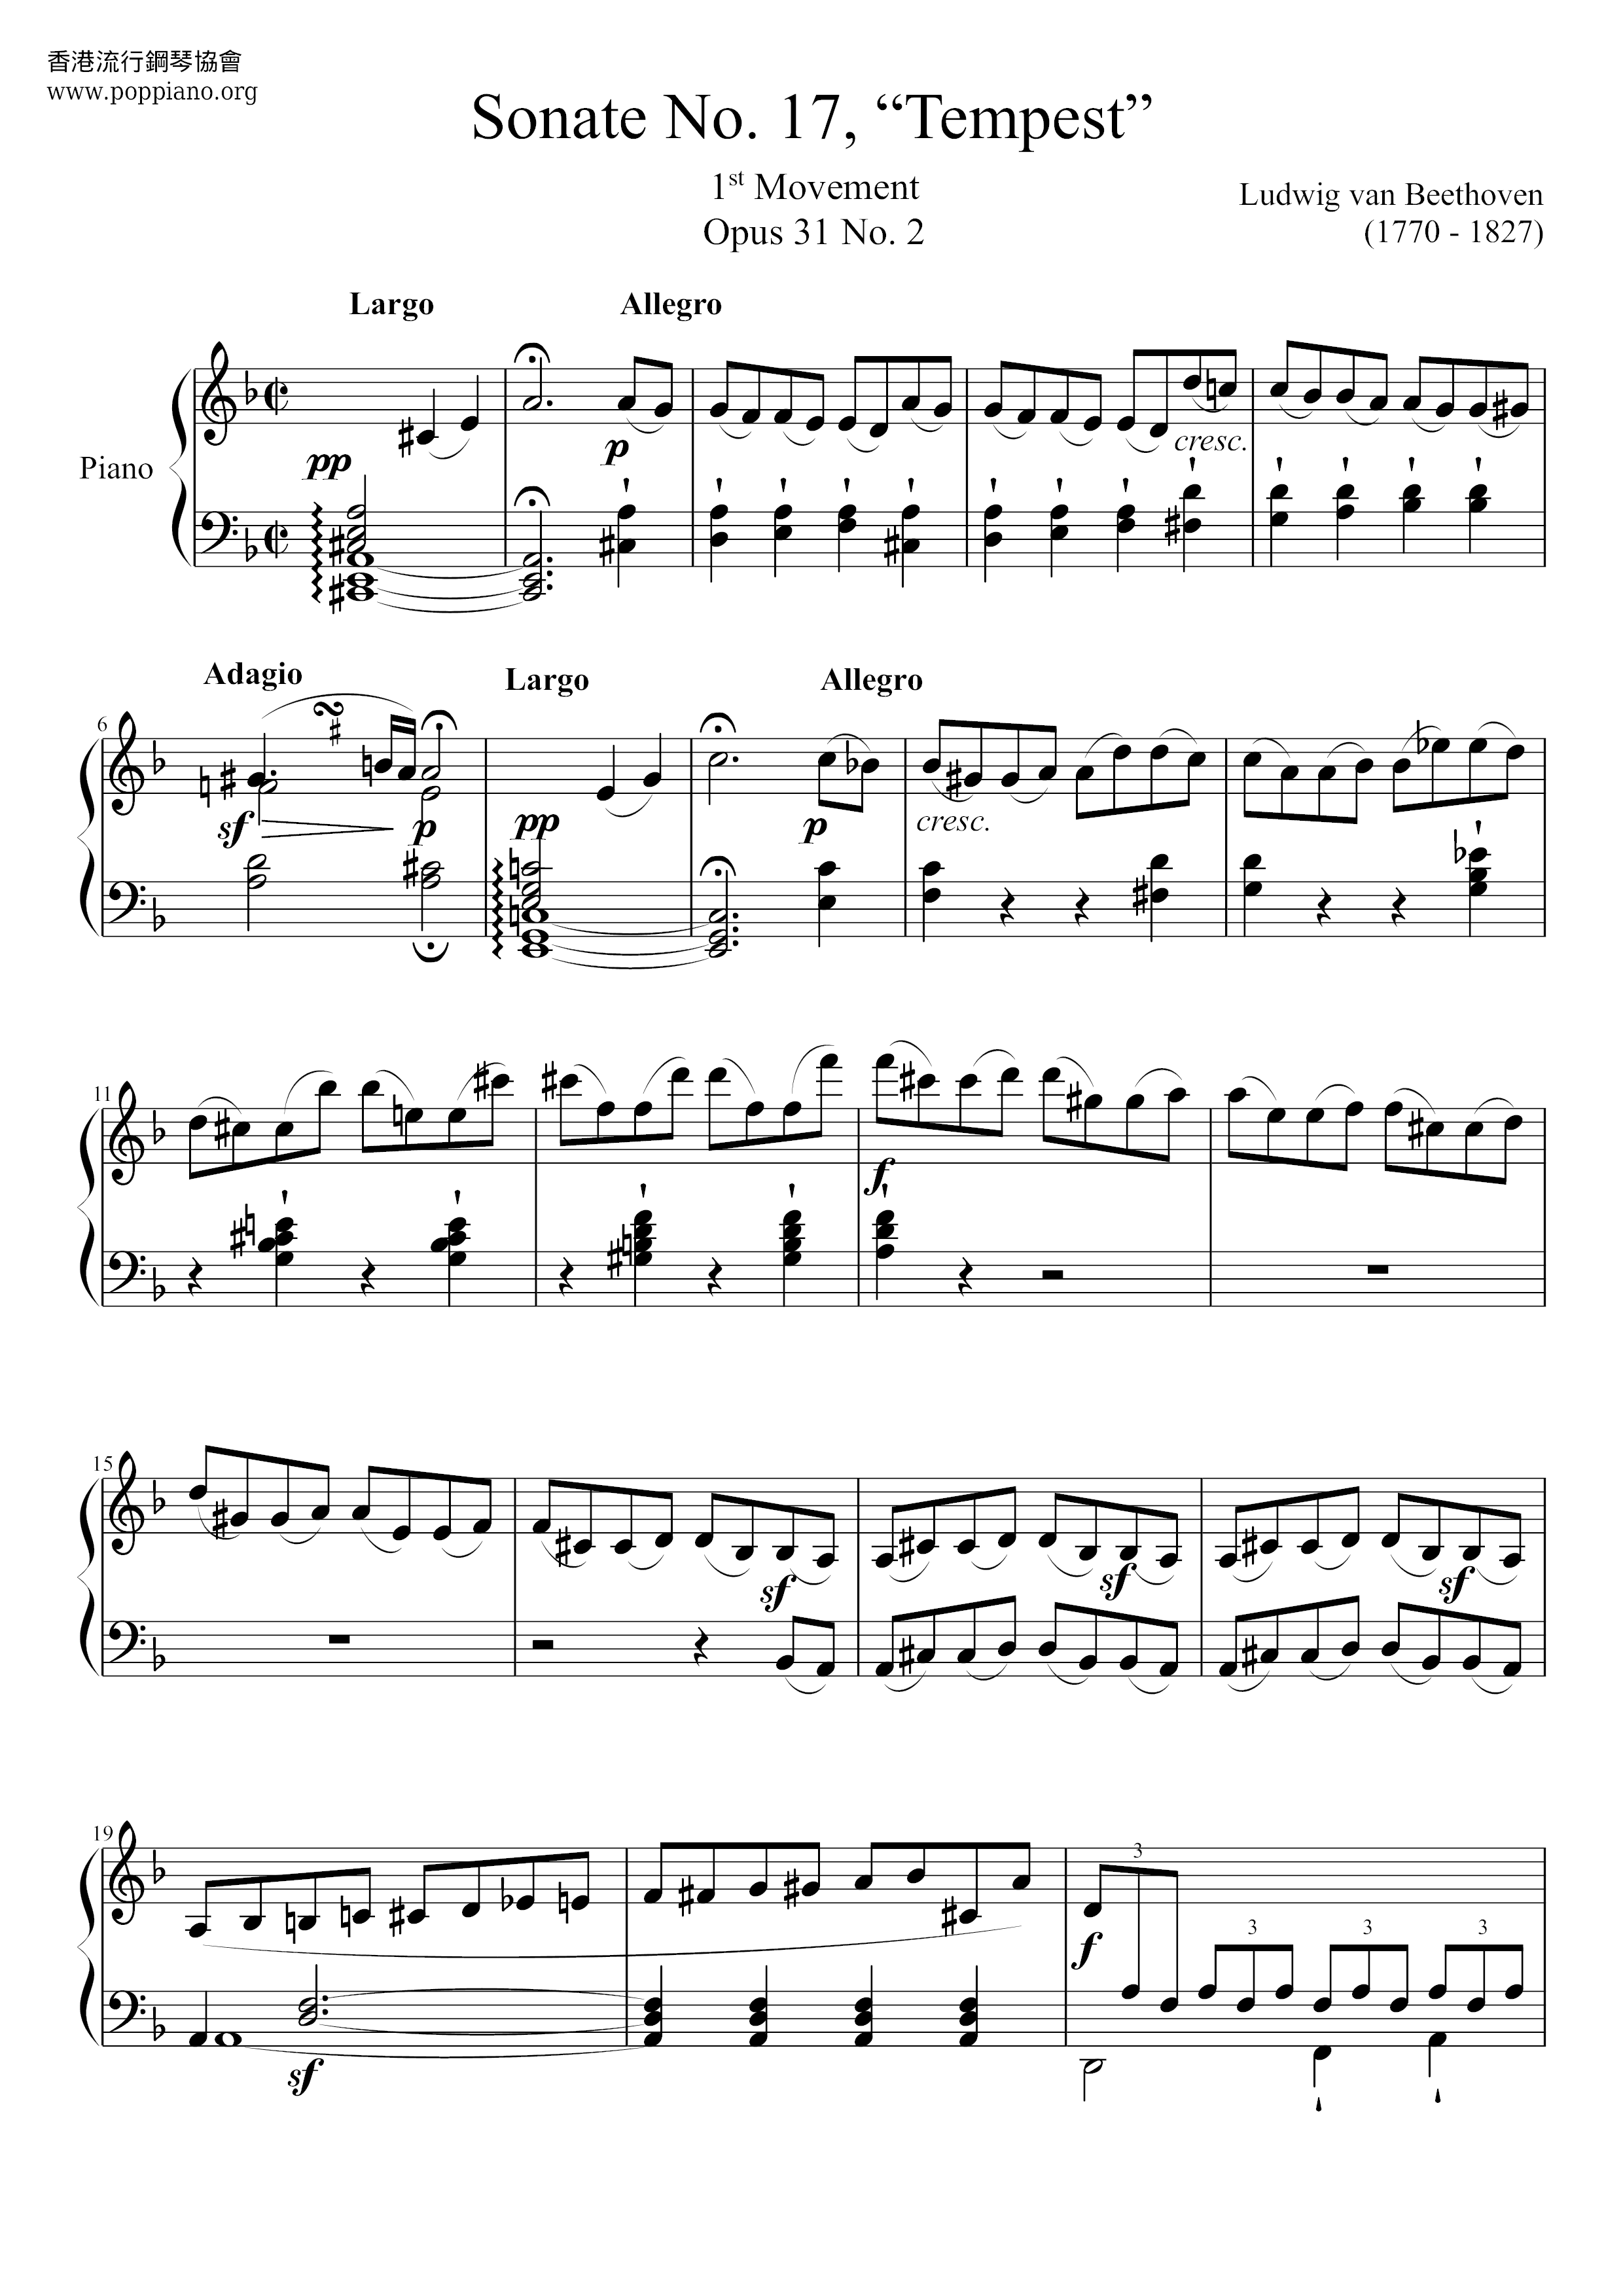 Sonata No. 17, Op. 31 Movt 2 Tempest Score